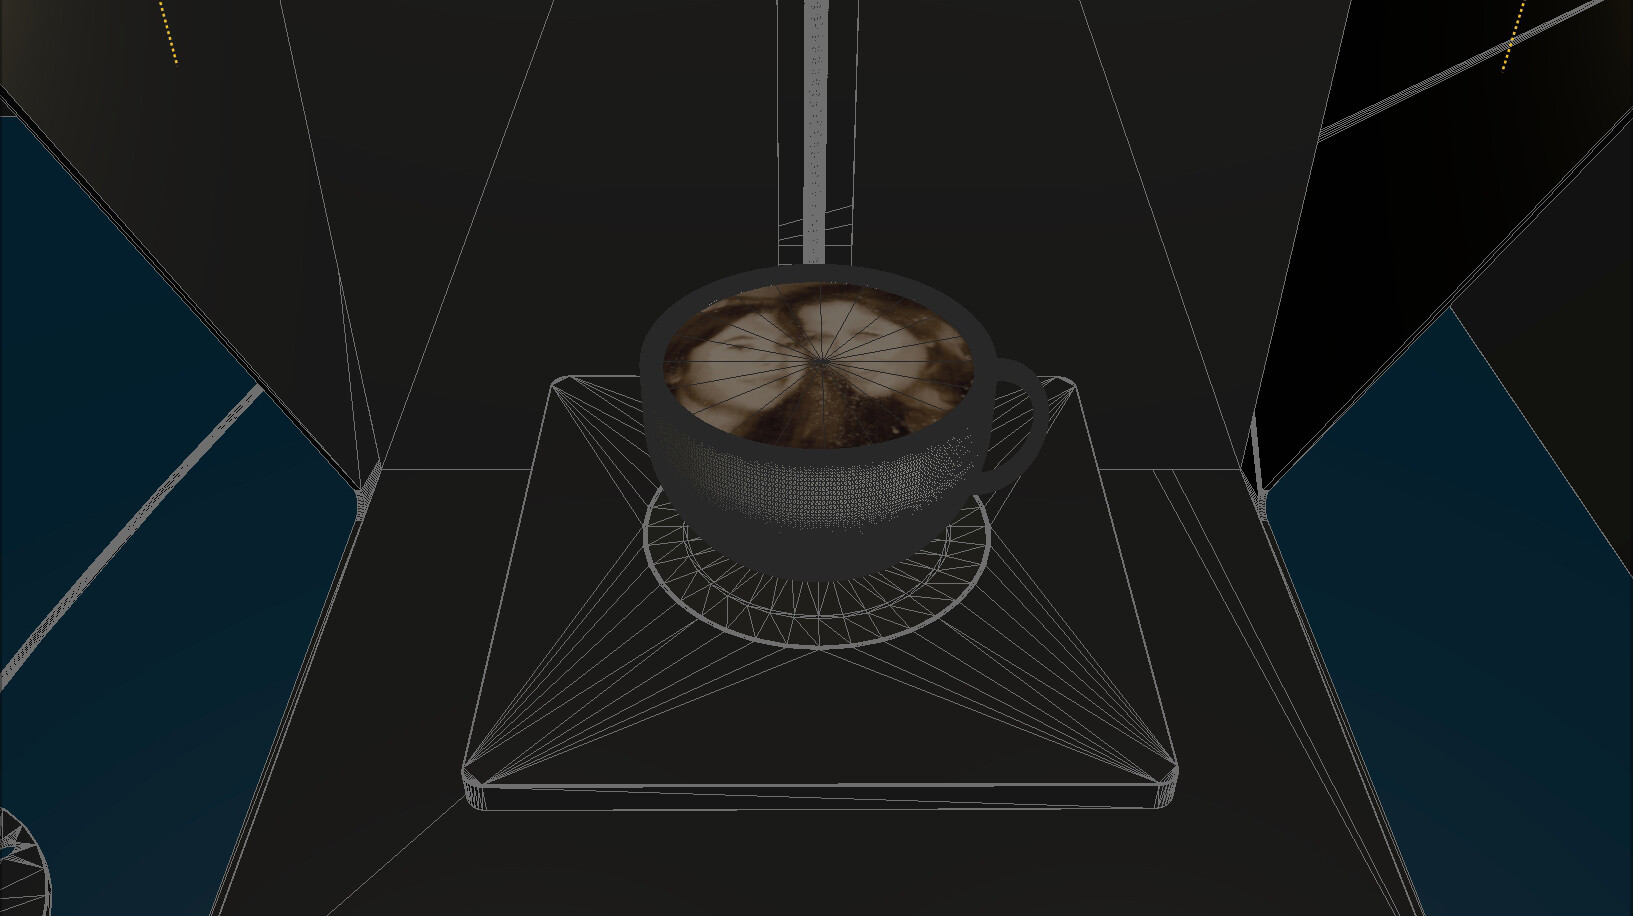 CINO PRINTER COFFEE  3D INNOVATION TECHNOLOGY